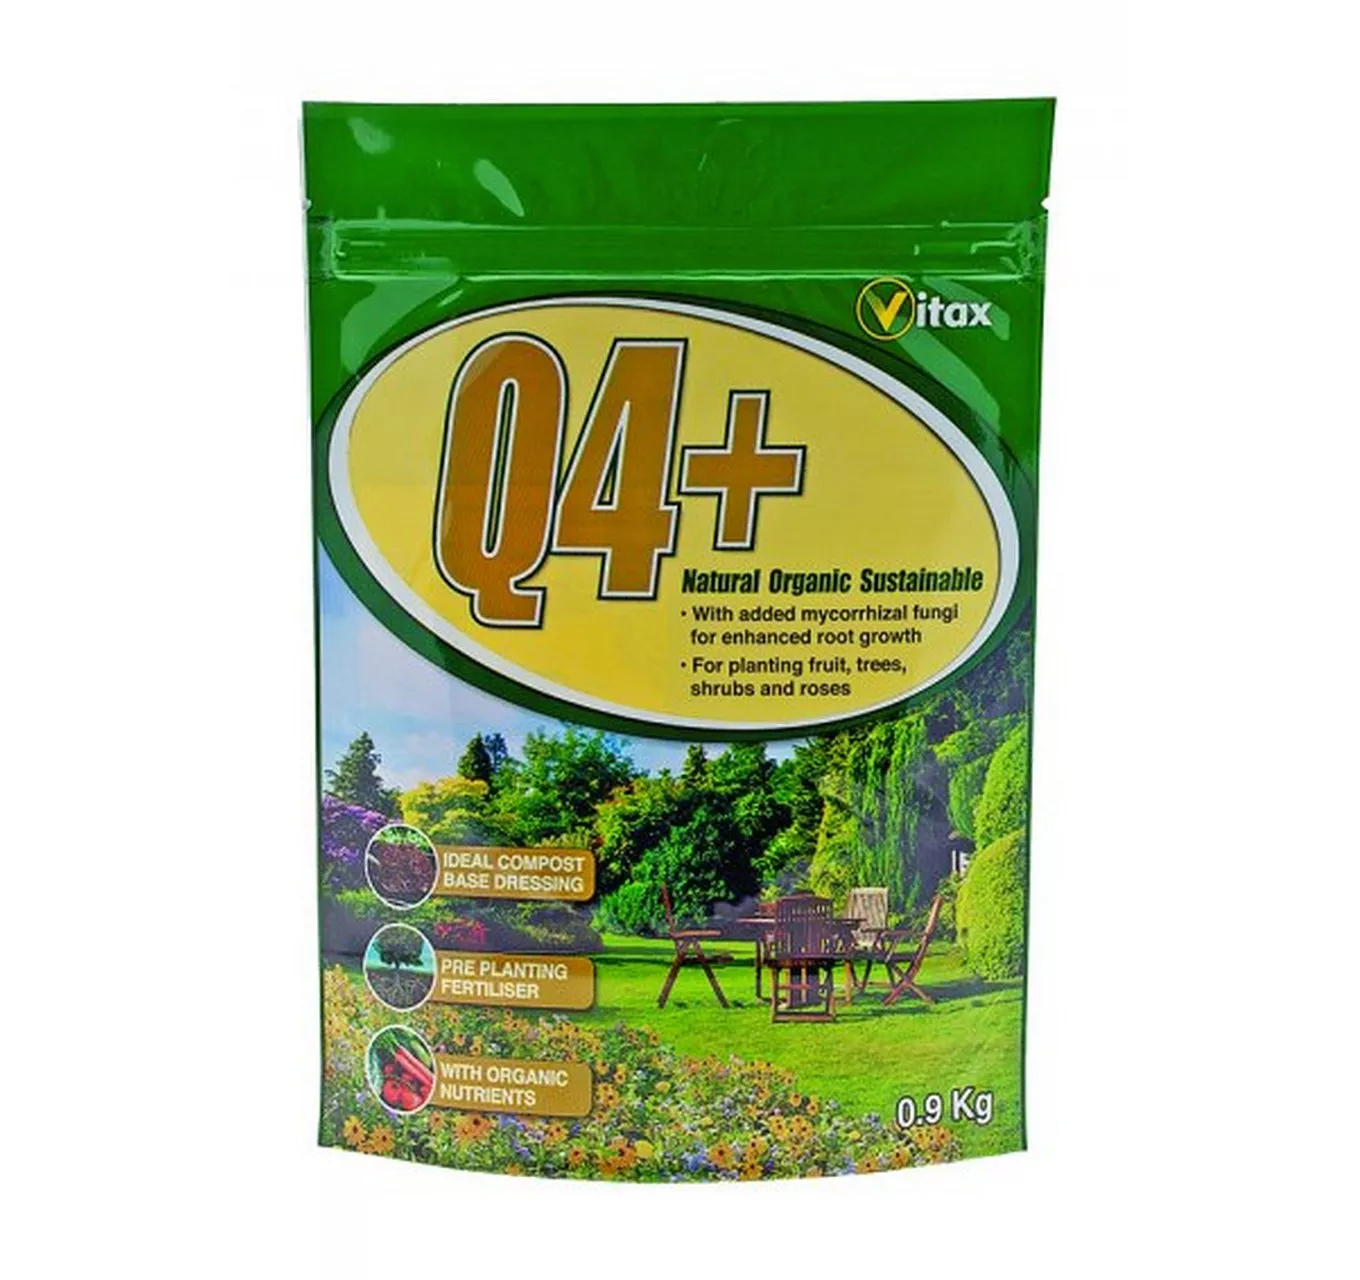 Q4 Plus Fertiliser 60g